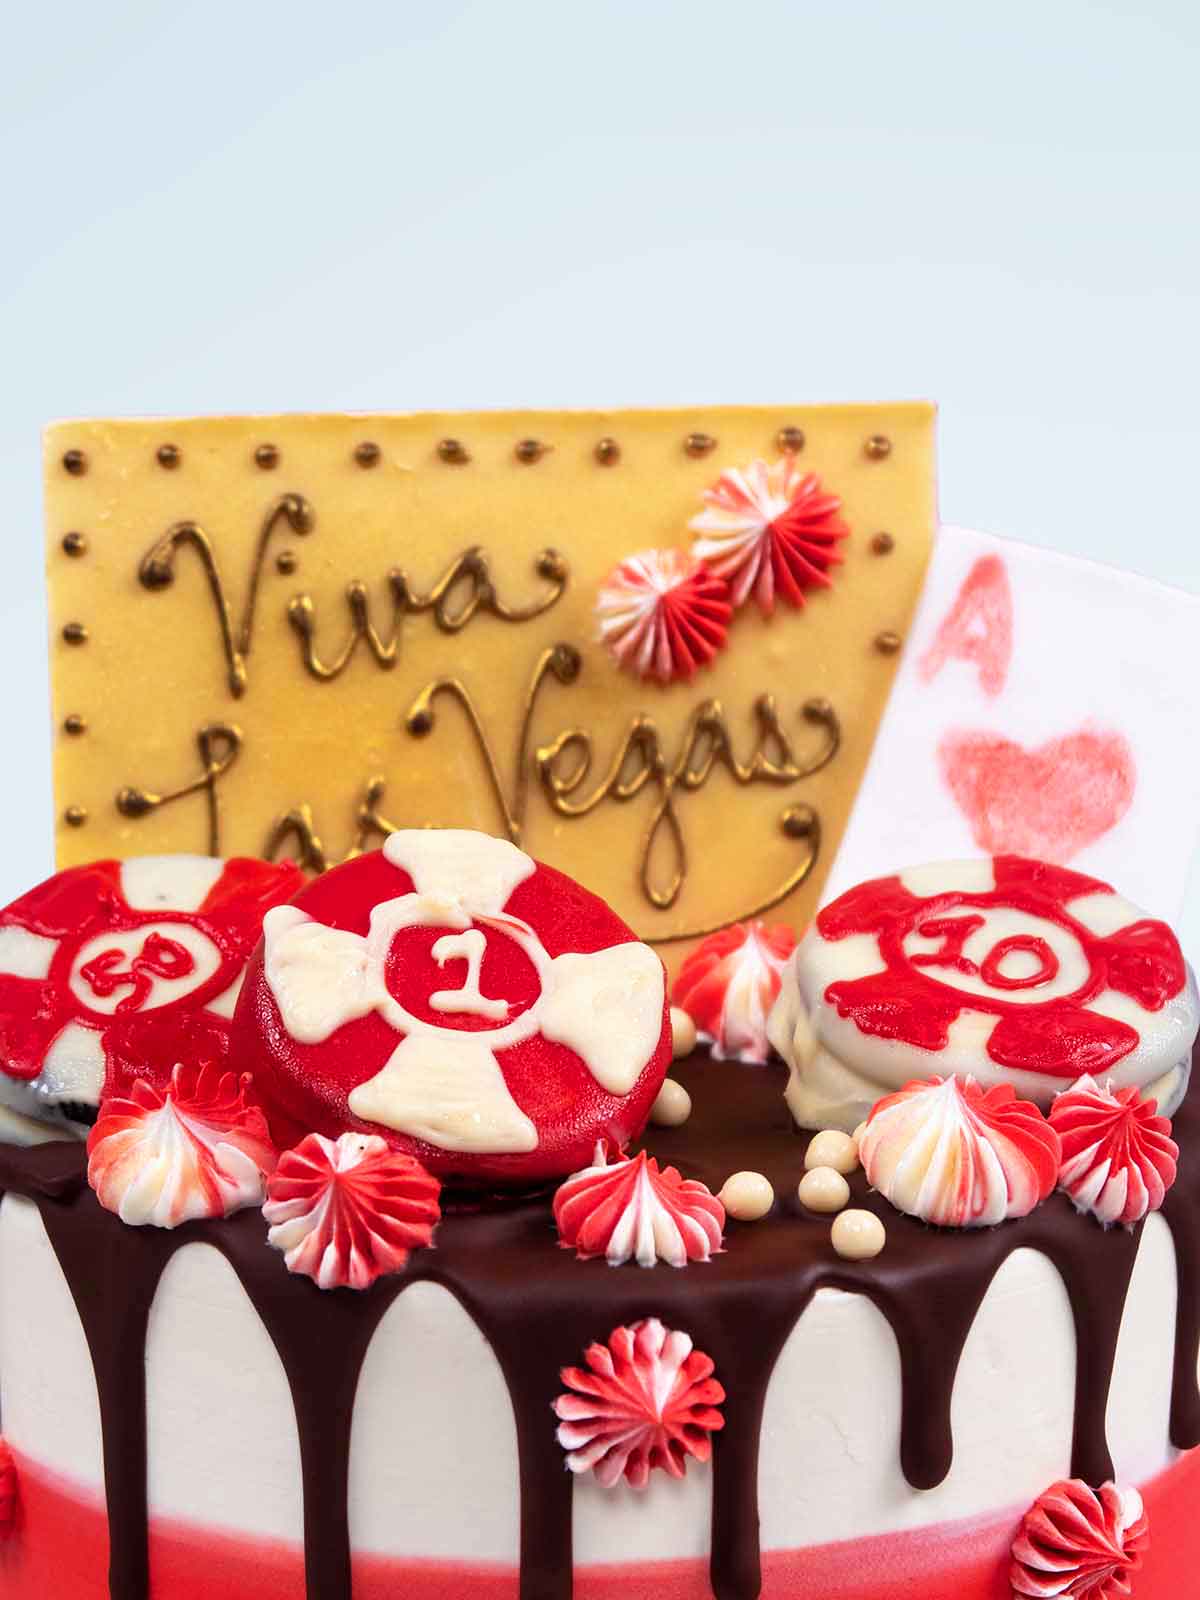 Viva Las Vegas Cake Near Me